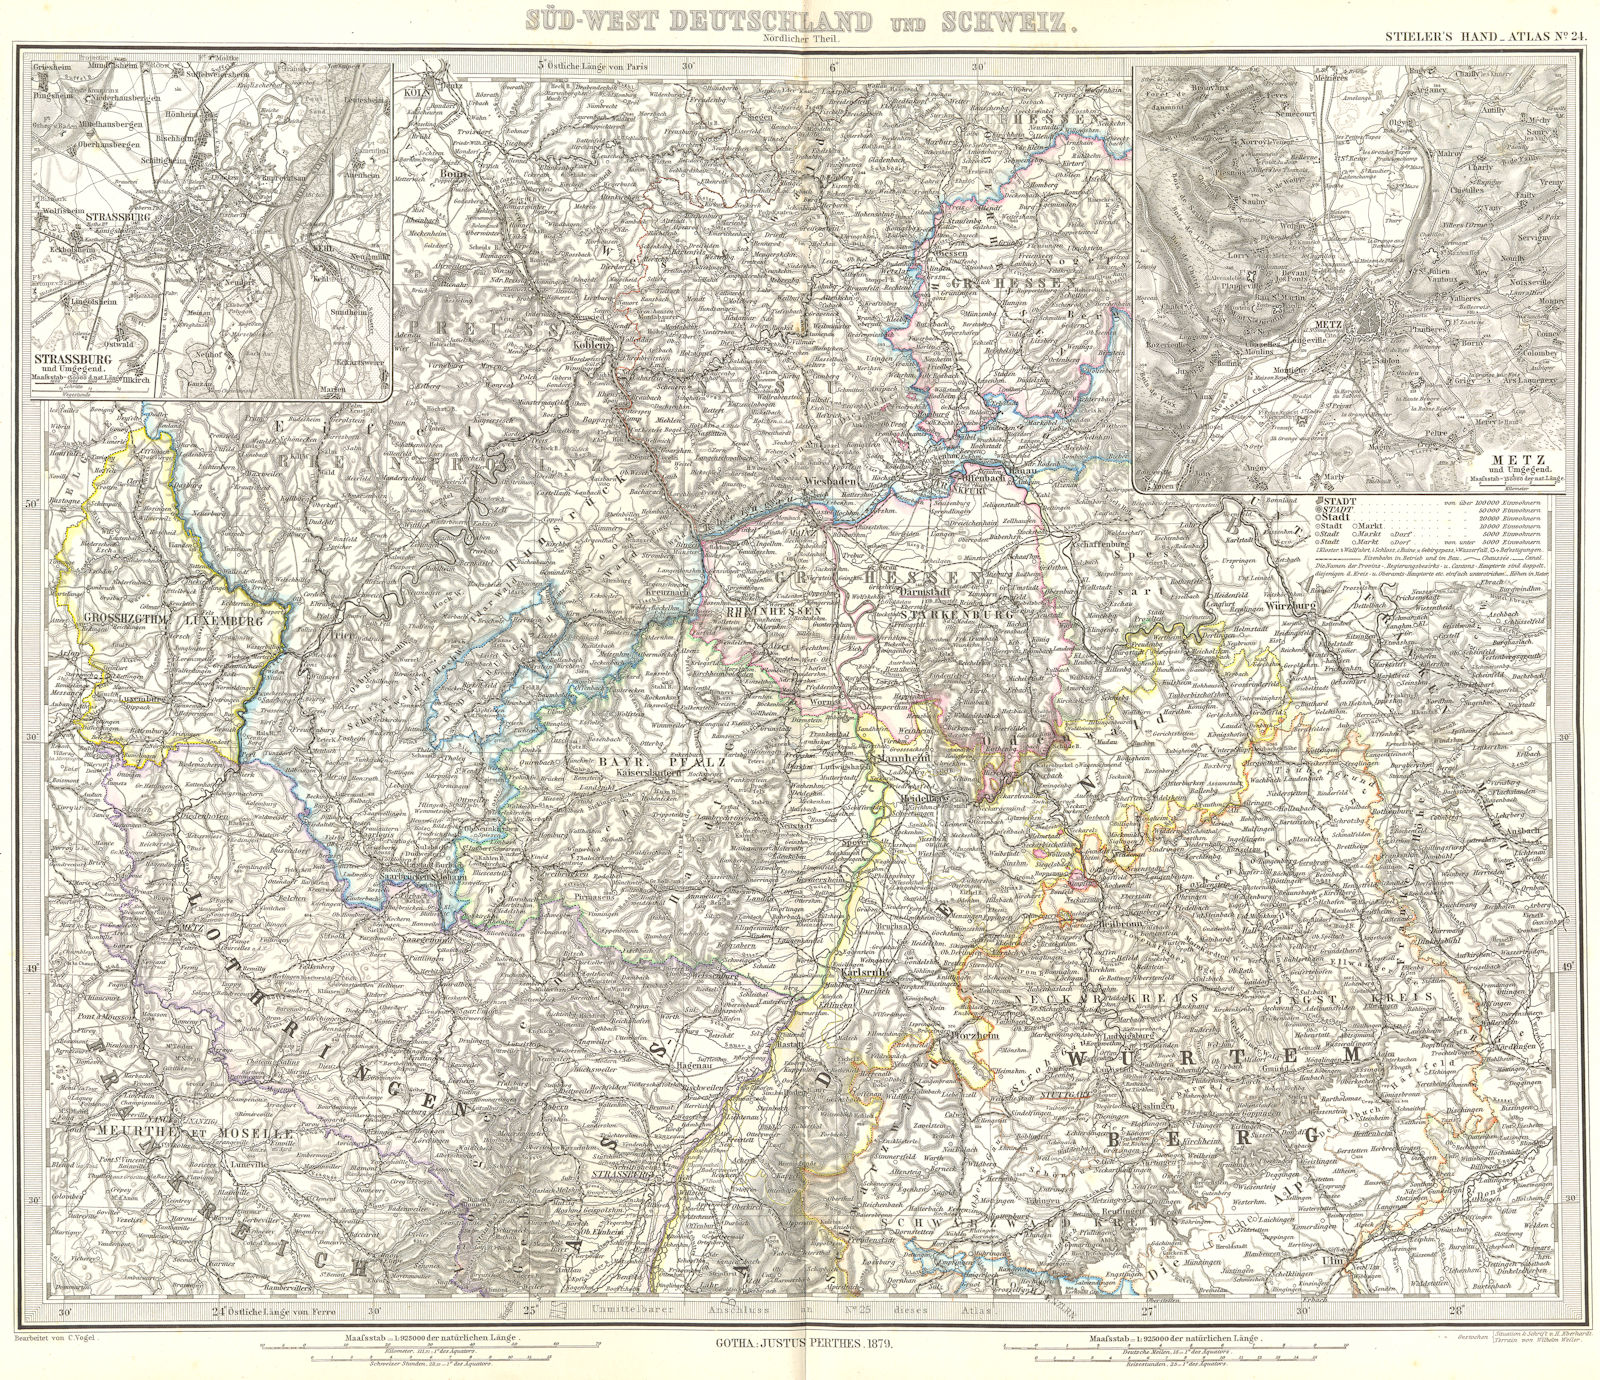 Associate Product GERMANY. Deutschland Schweiz; Strasbourg; Metz 1879 old antique map plan chart